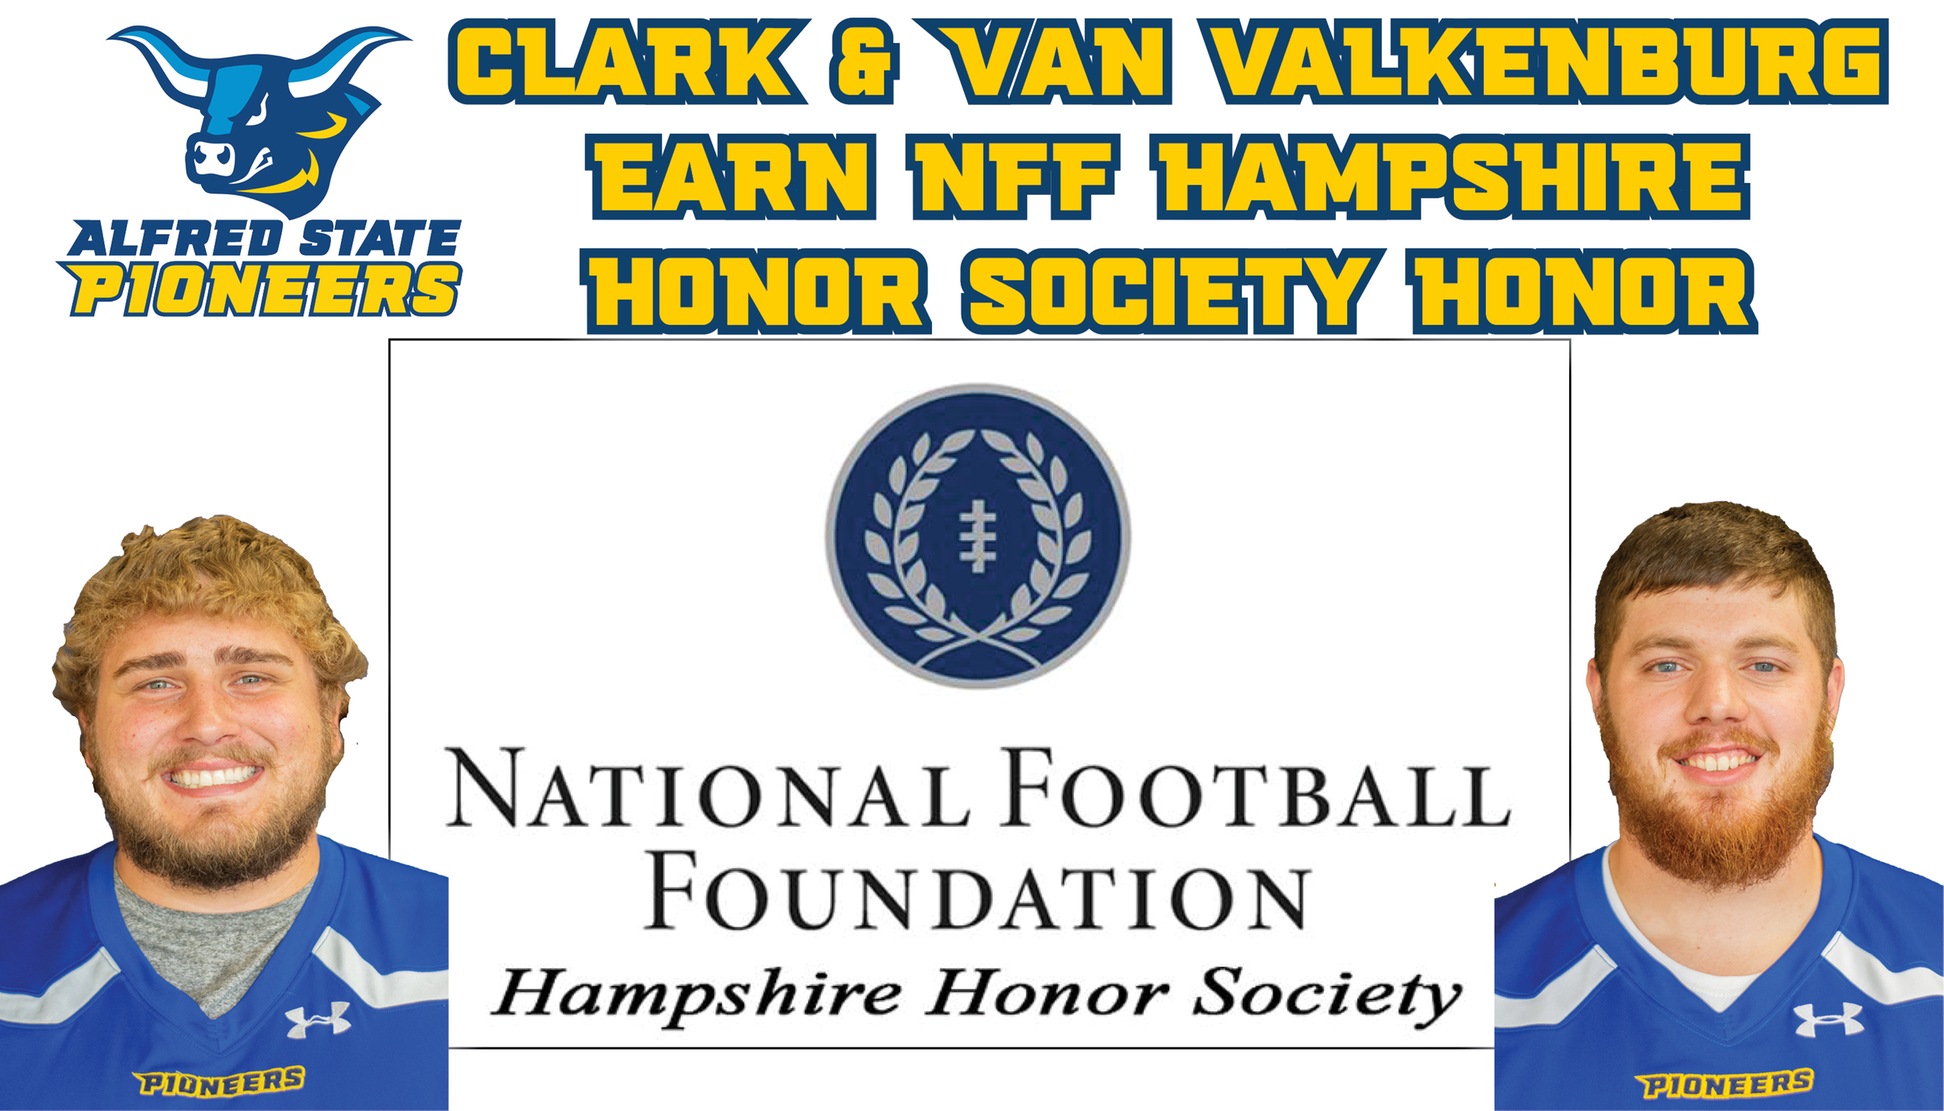 Devon Clark and Sam Van Valkenburg earn NFF Hampshire Honor Society Honor.